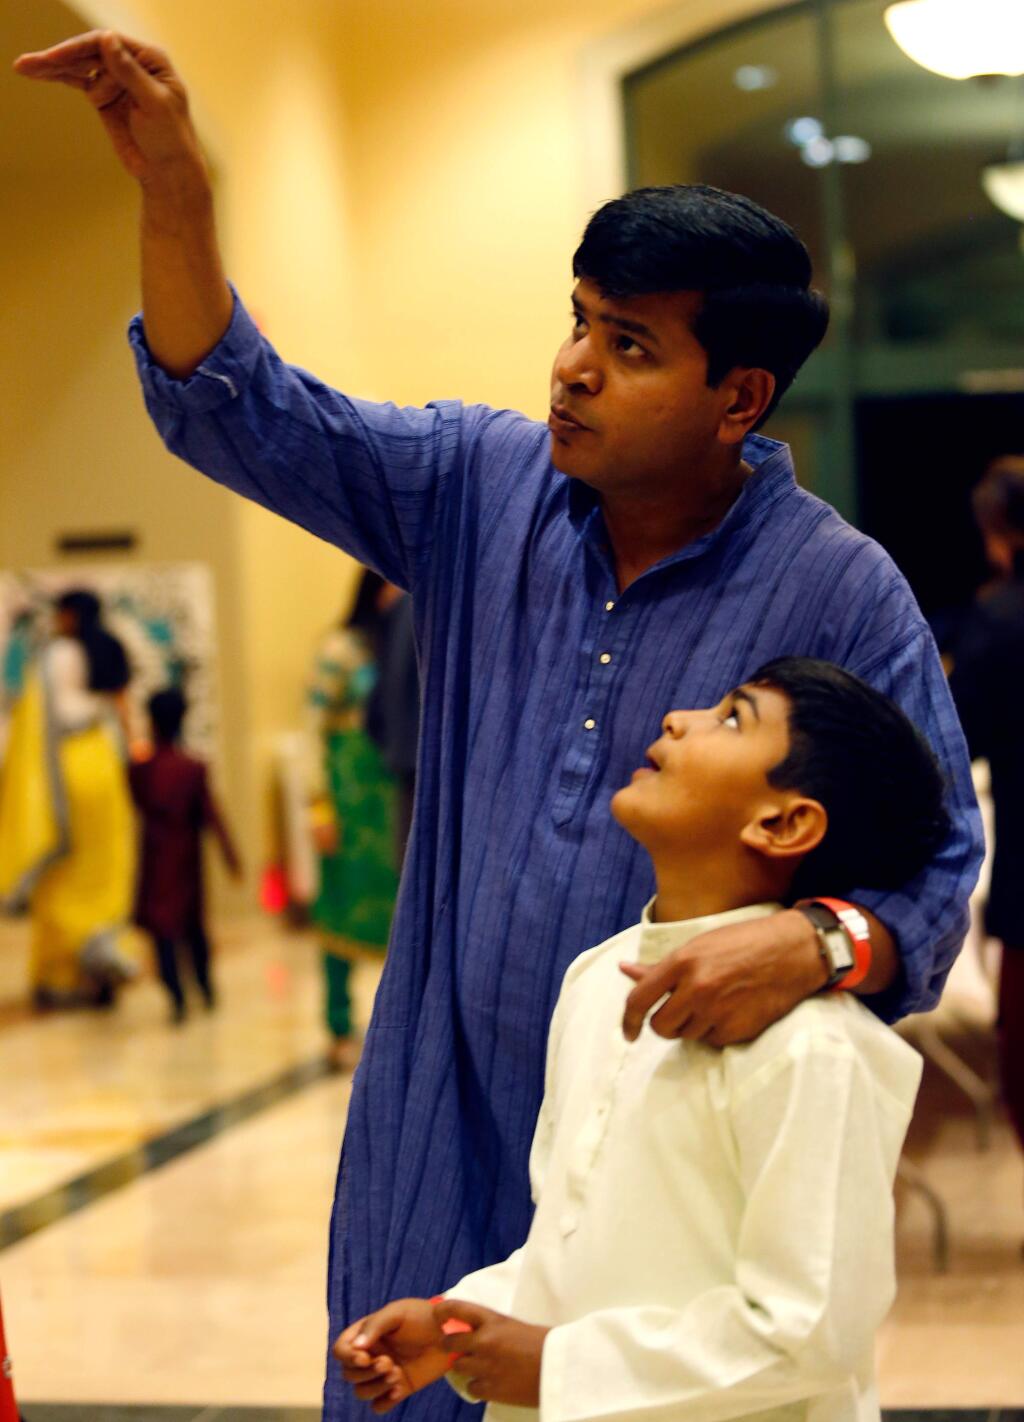 Atul Patil talks with his son Arav, 9, during the North Bay Indian American Association's Diwali Festival at the Jackson Theater in Santa Rosa, California on Saturday, November 12, 2016. (Alvin Jornada / The Press Democrat)